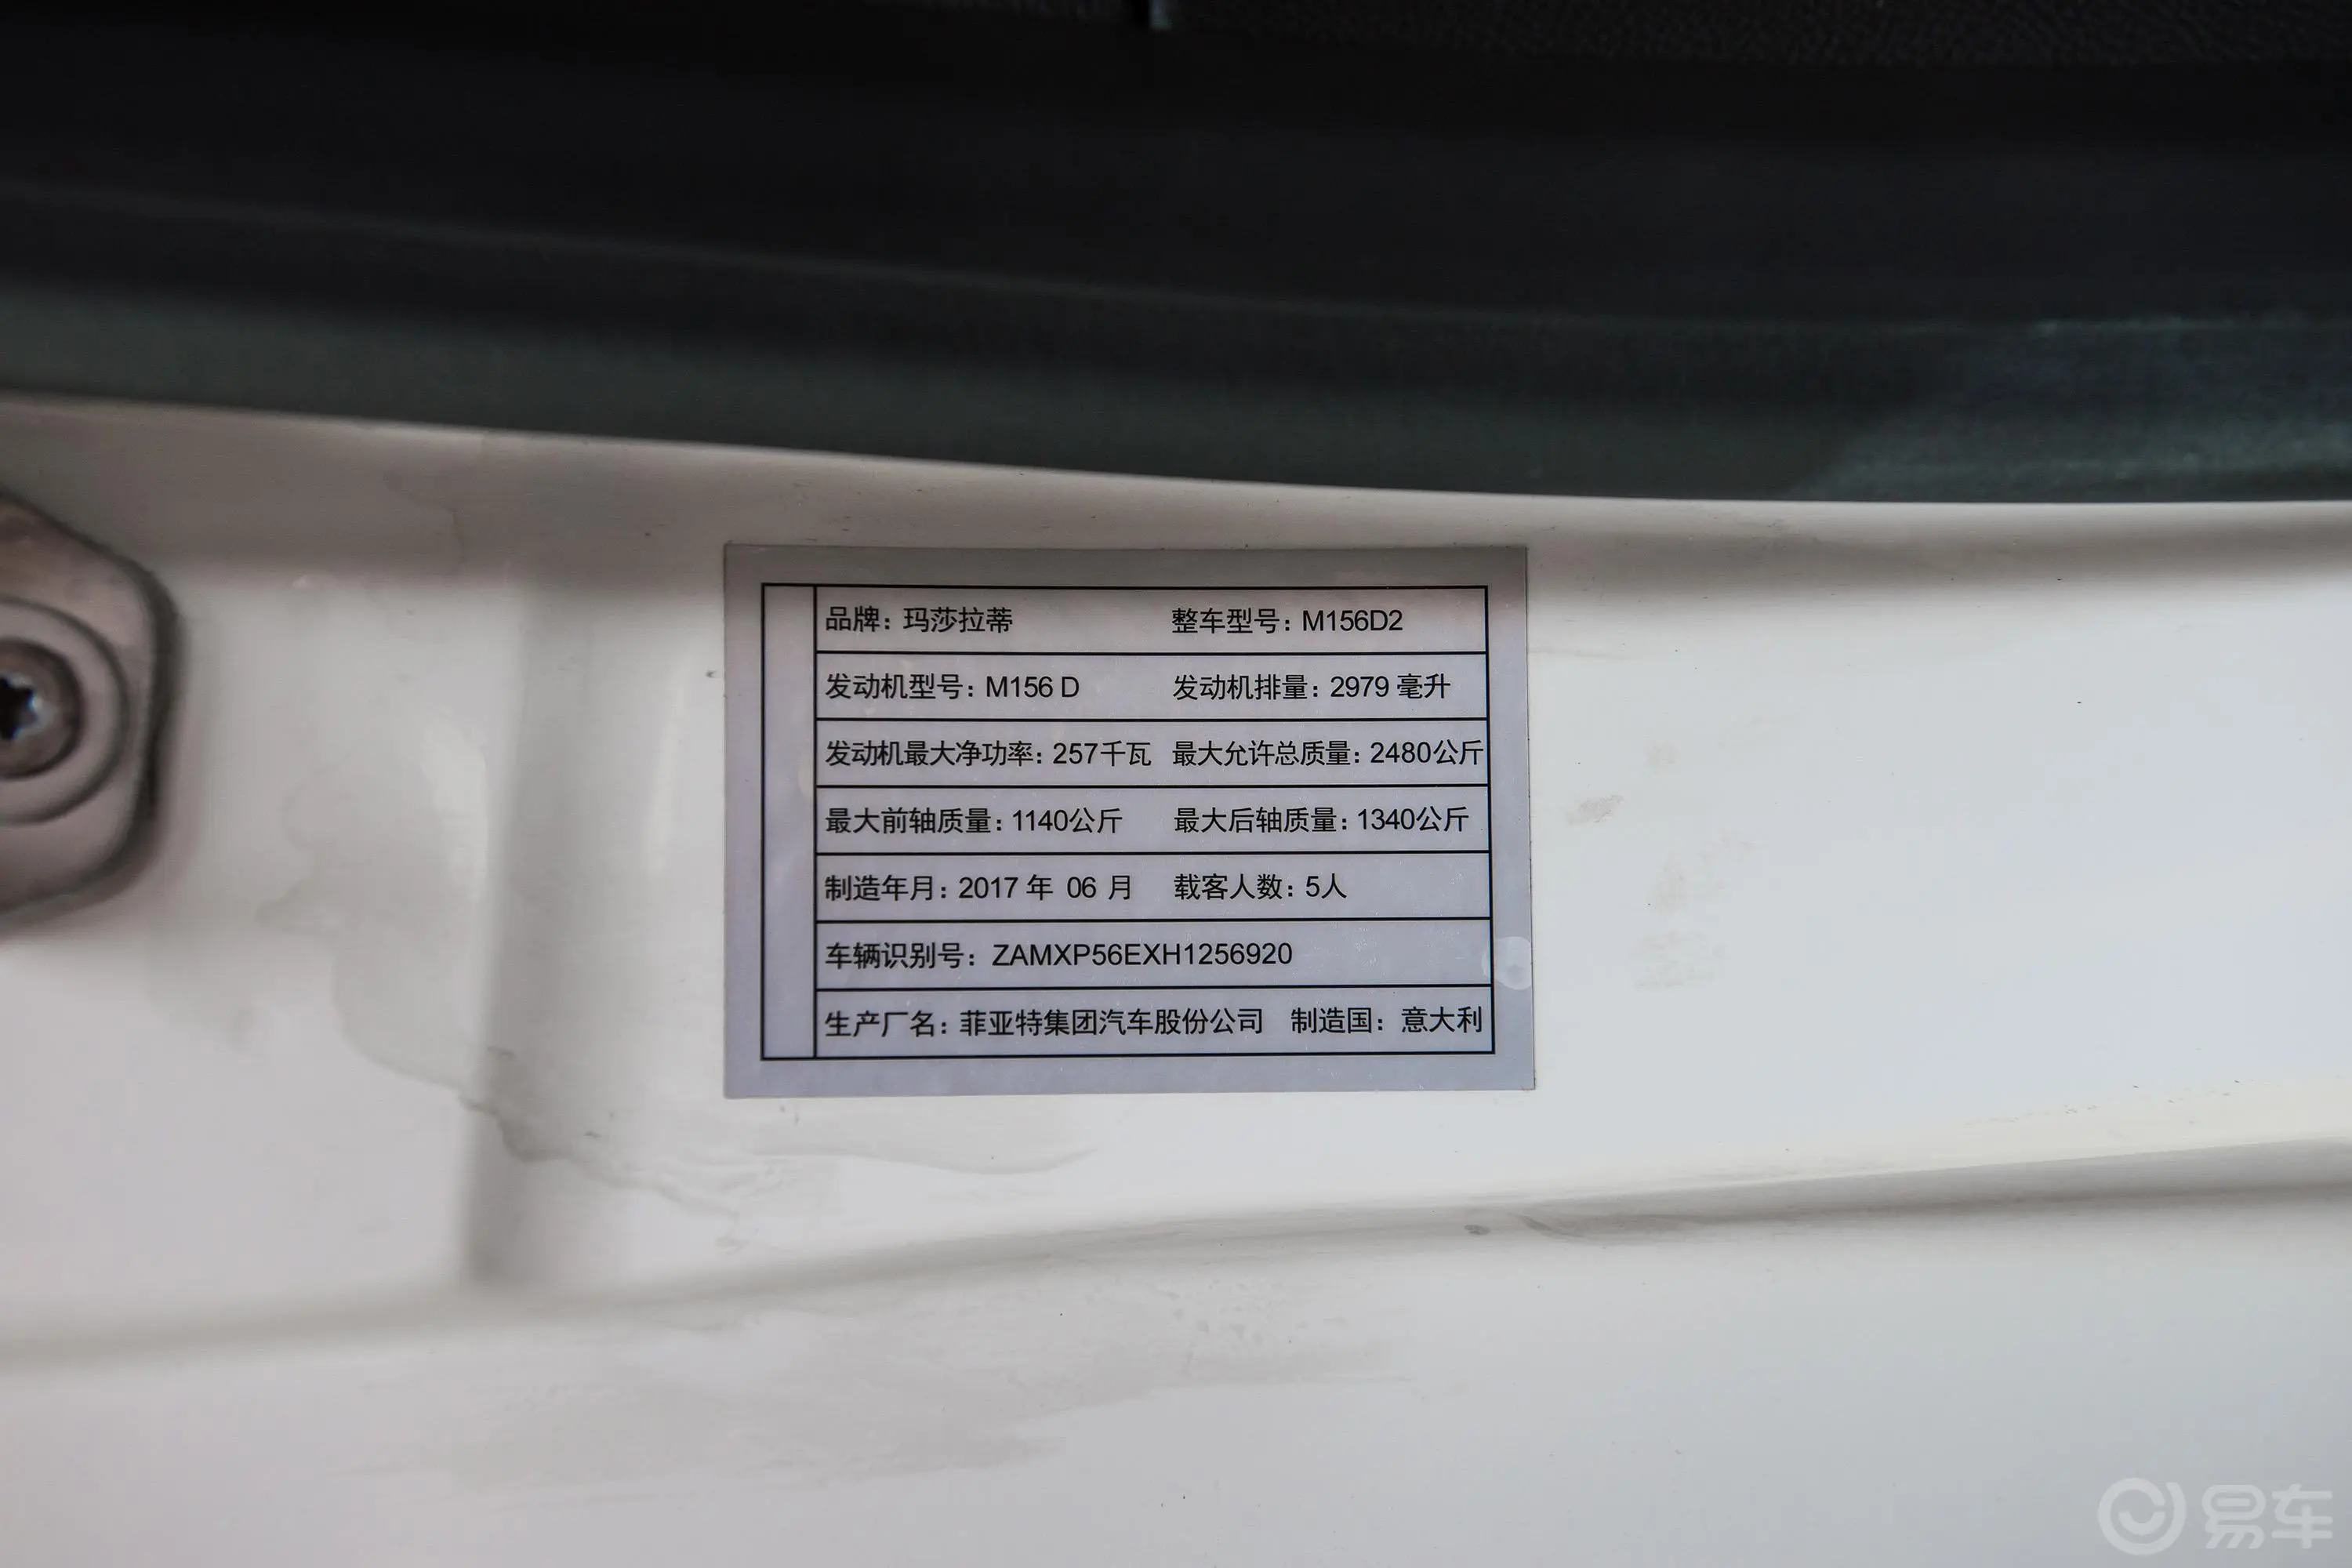 Quattroporte350Hp 运动版车辆信息铭牌